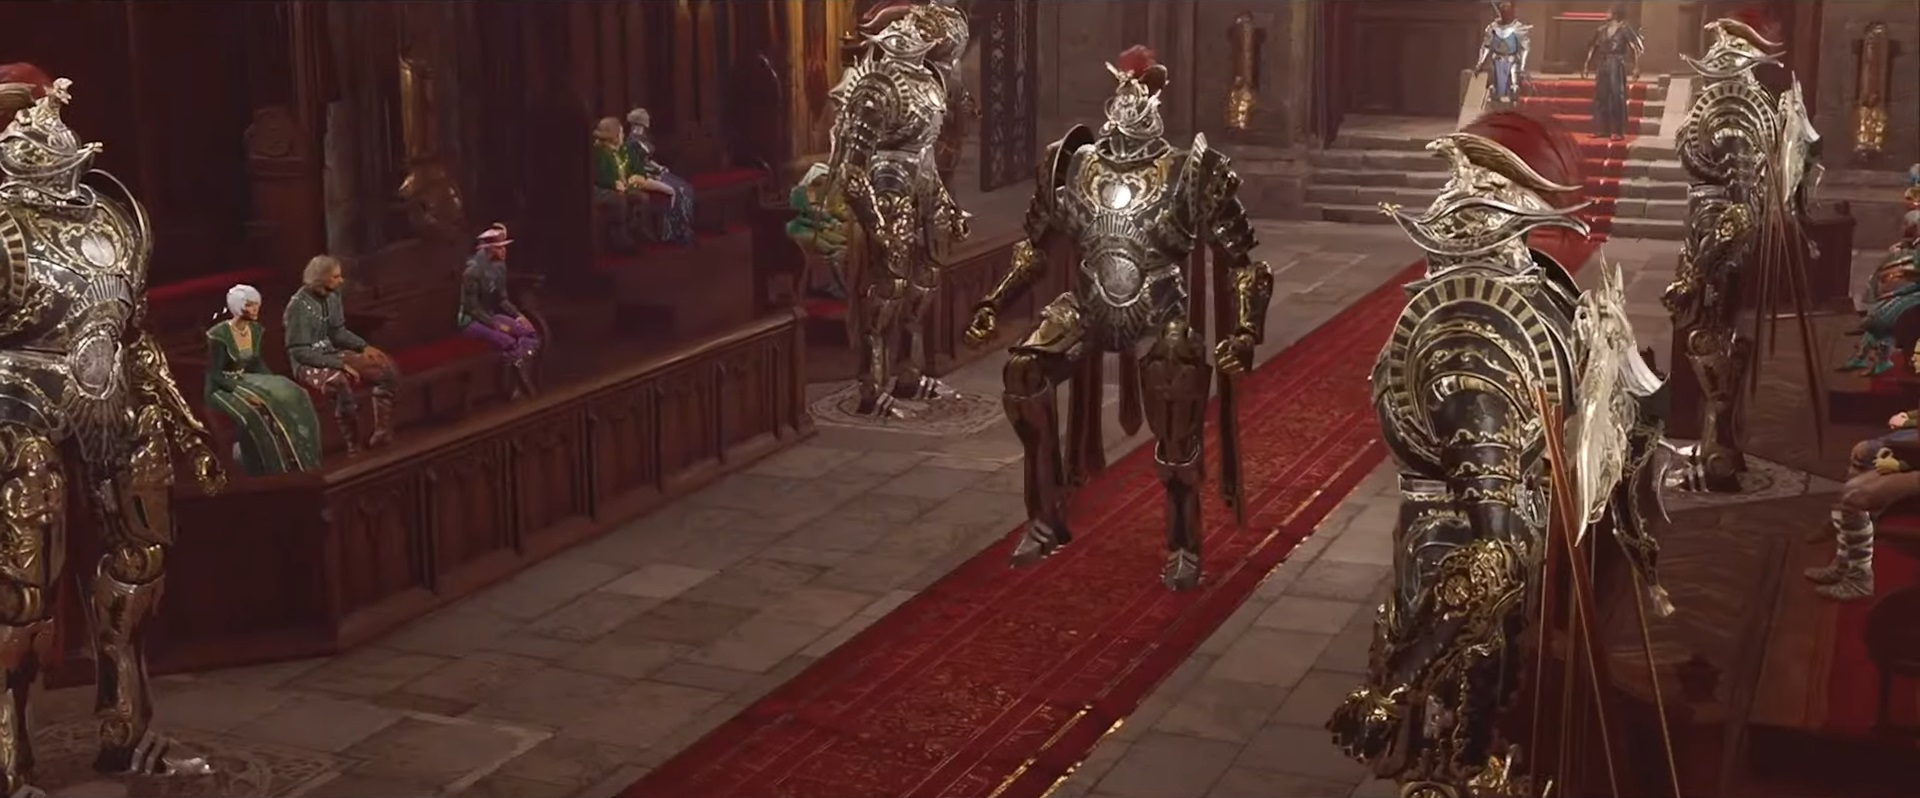 automaton baroque knight walking down red carpet